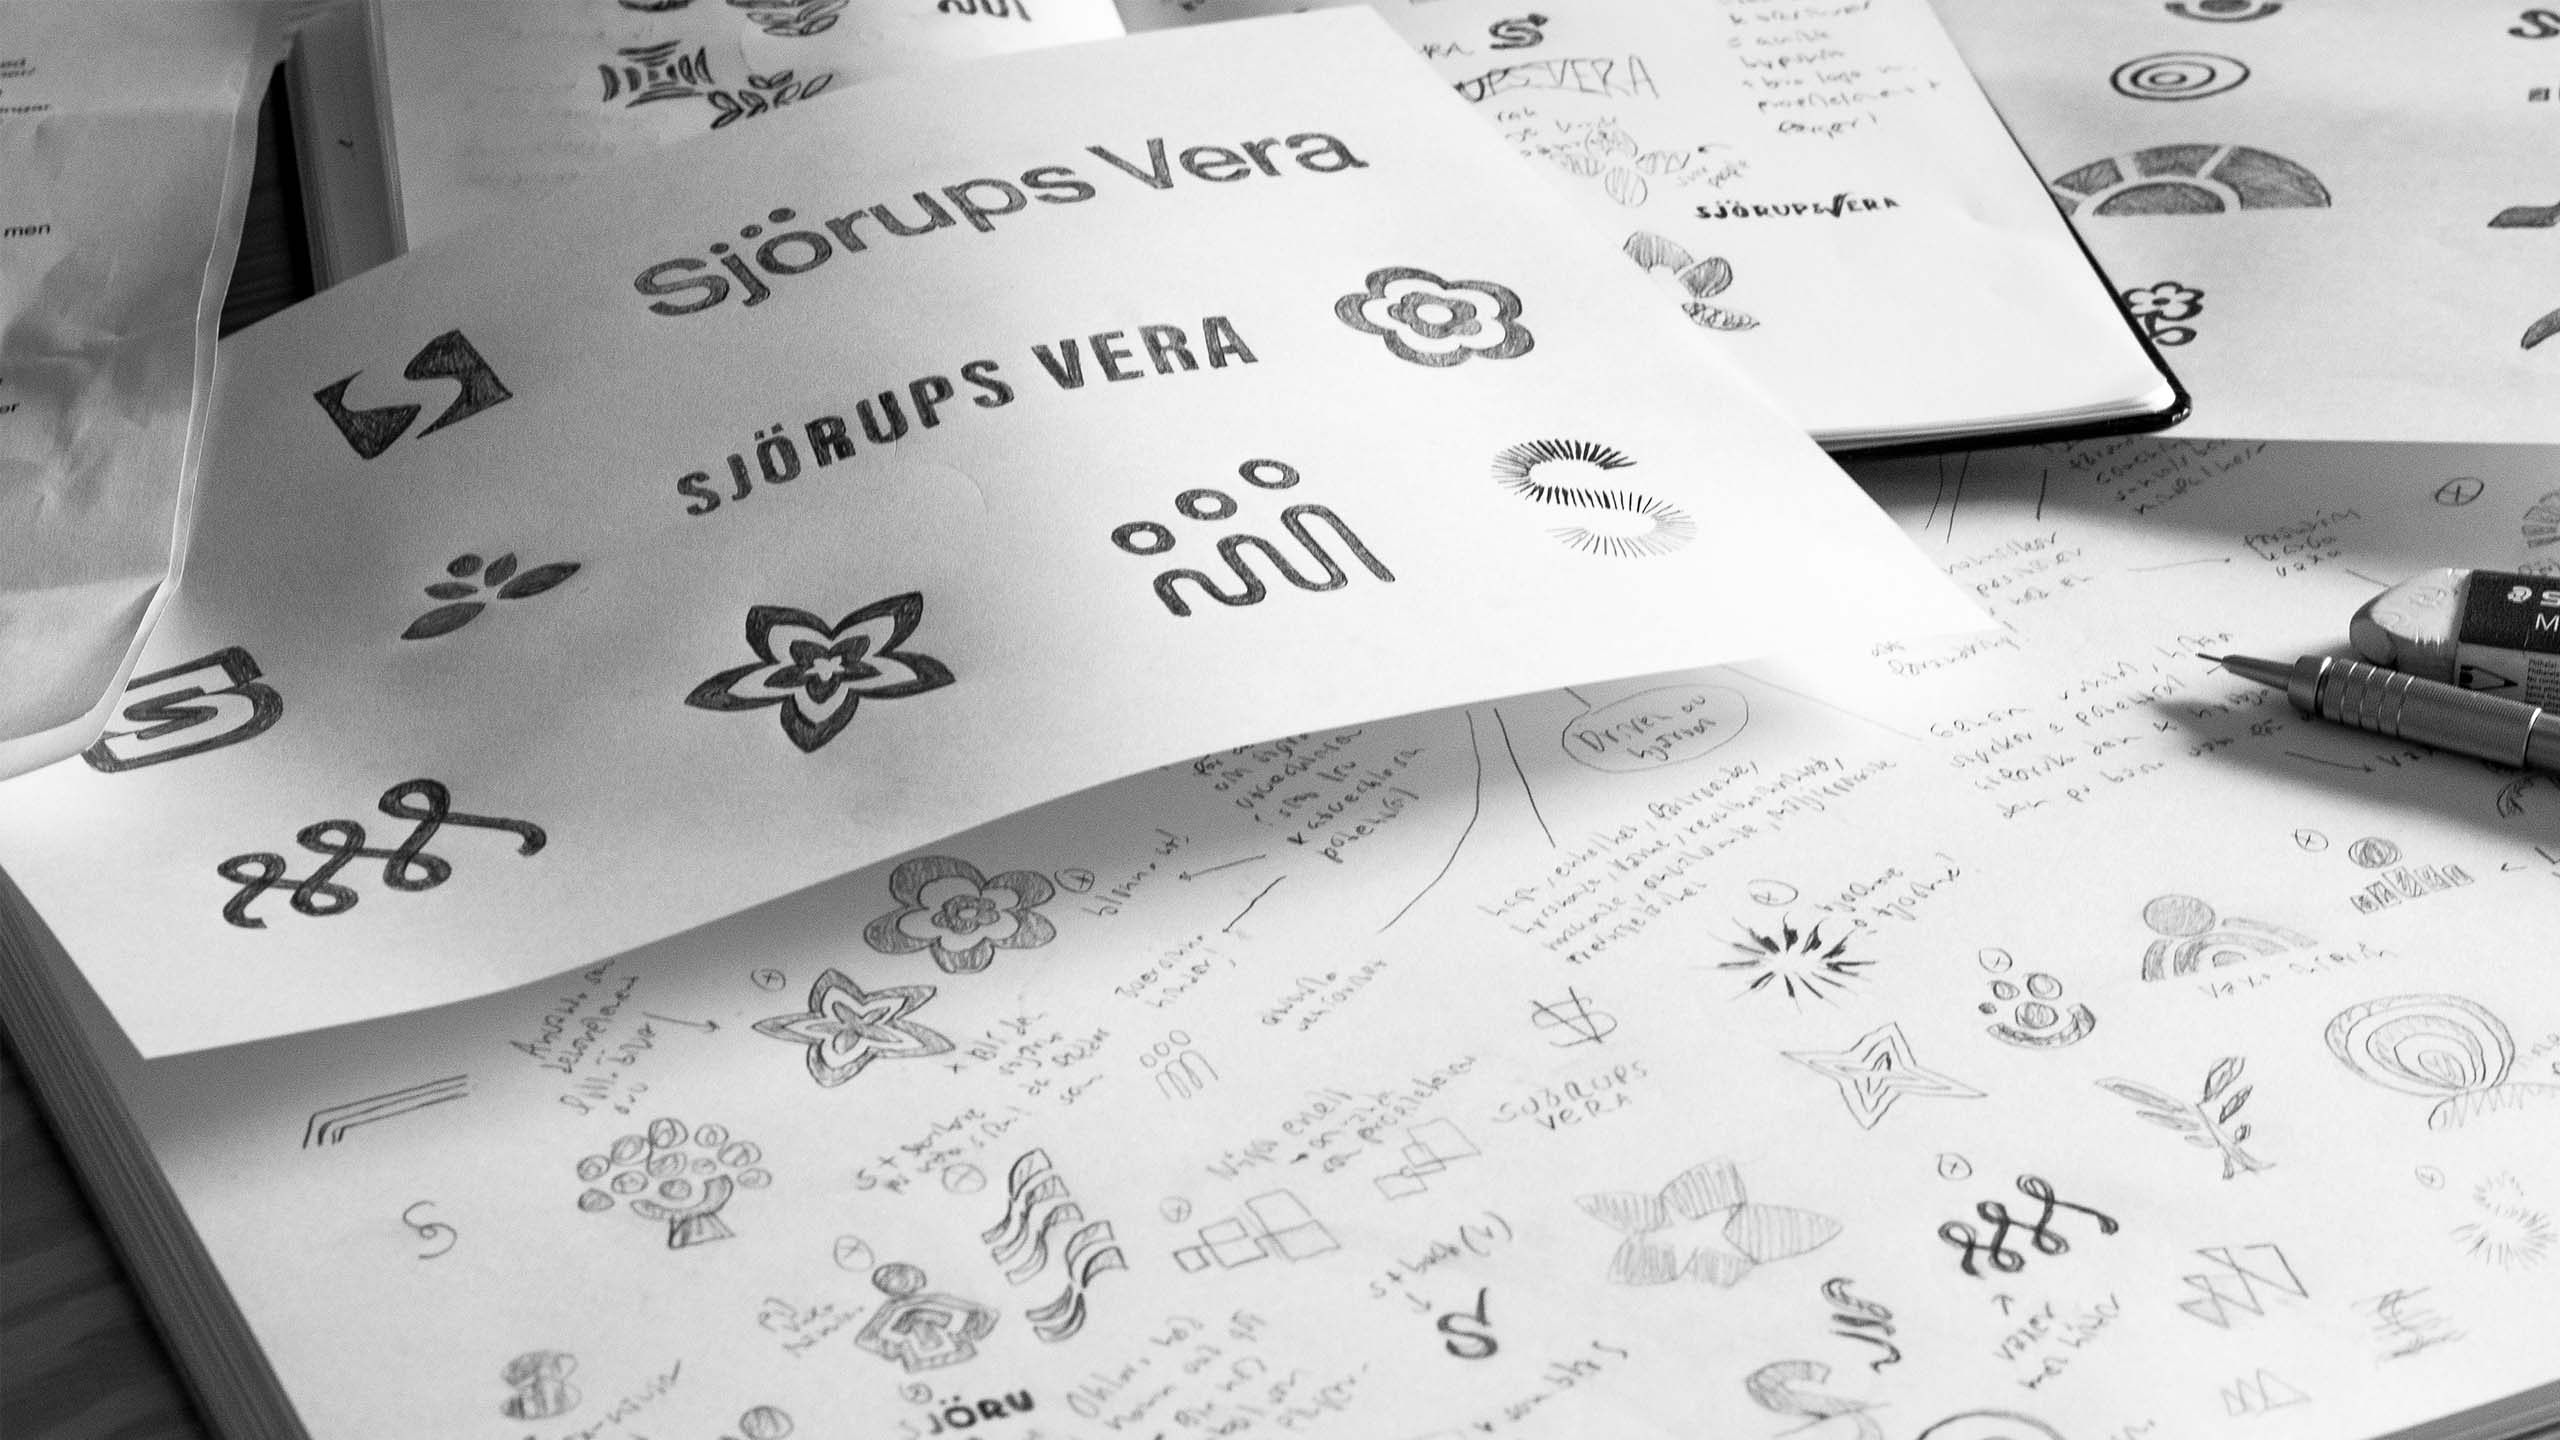 Hand-drawn sketches for the Sjörups Vera visual identity.